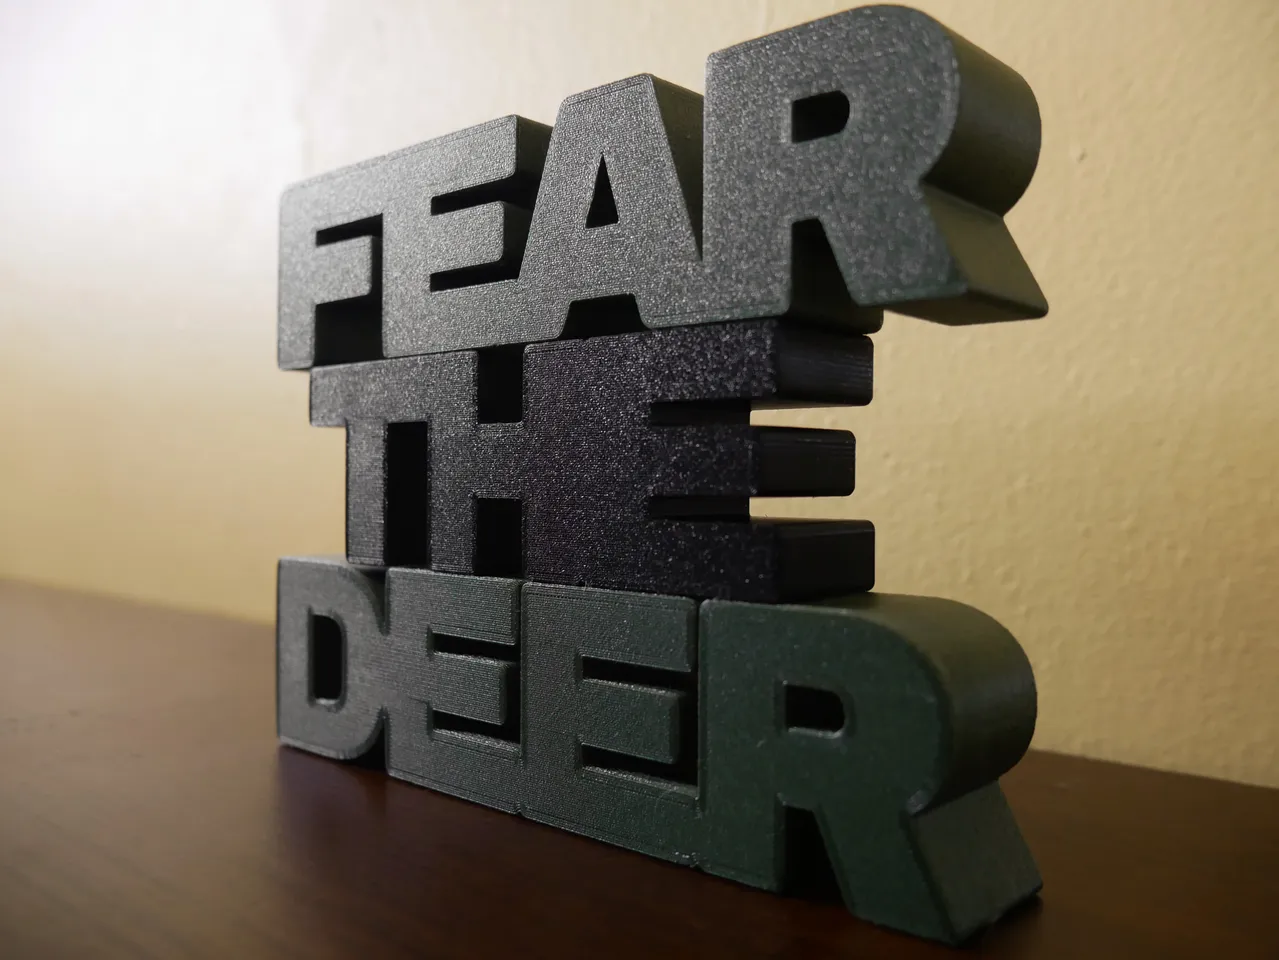 Fear the Deer sign by PenguinNinja